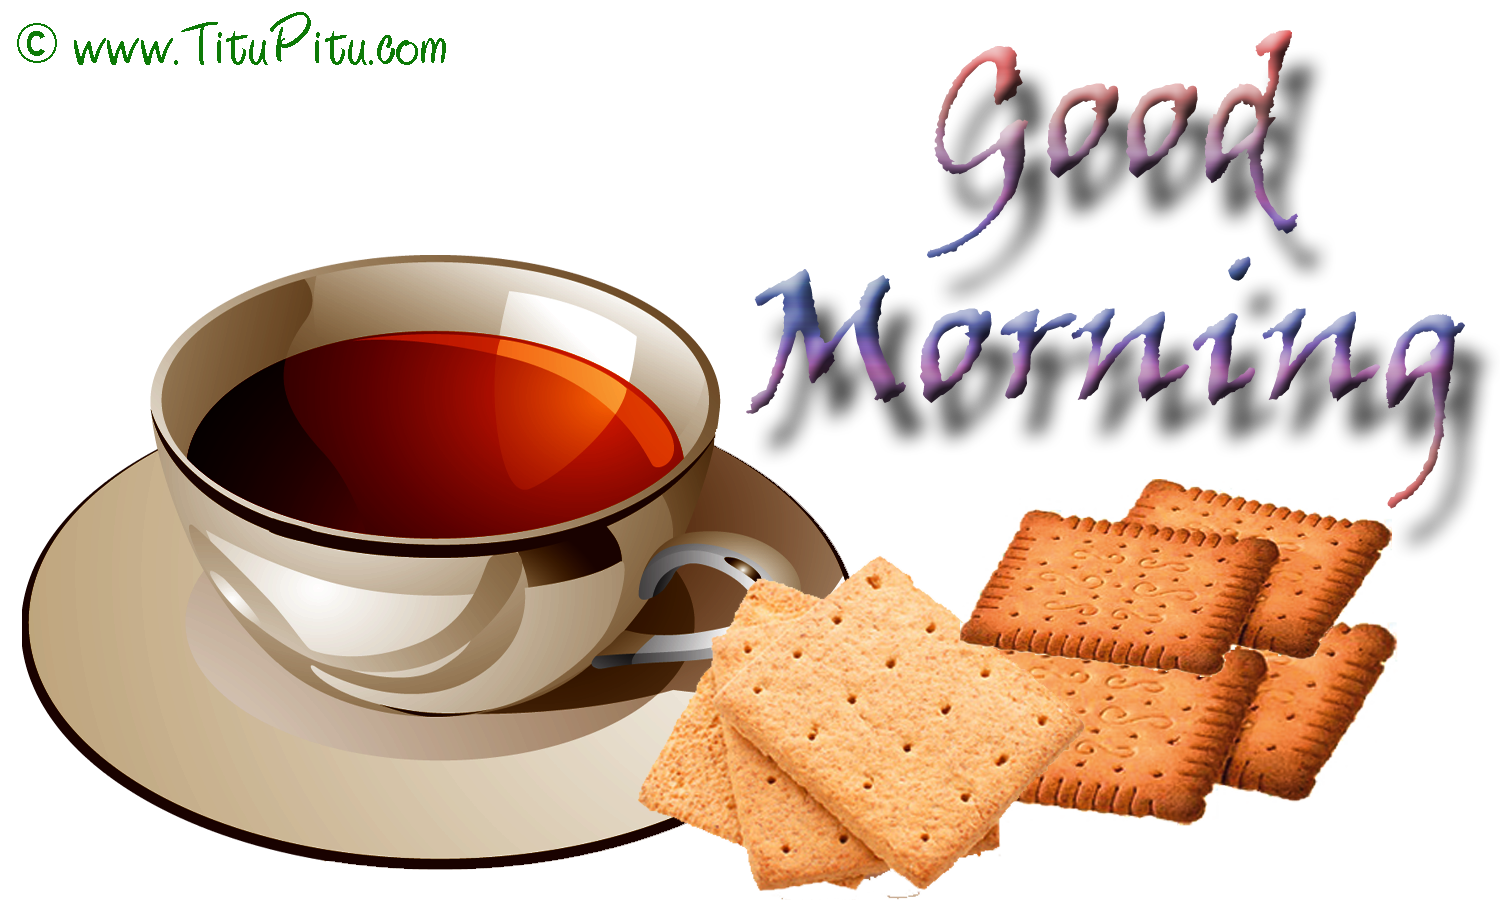 Good Morning Tea Message Imag